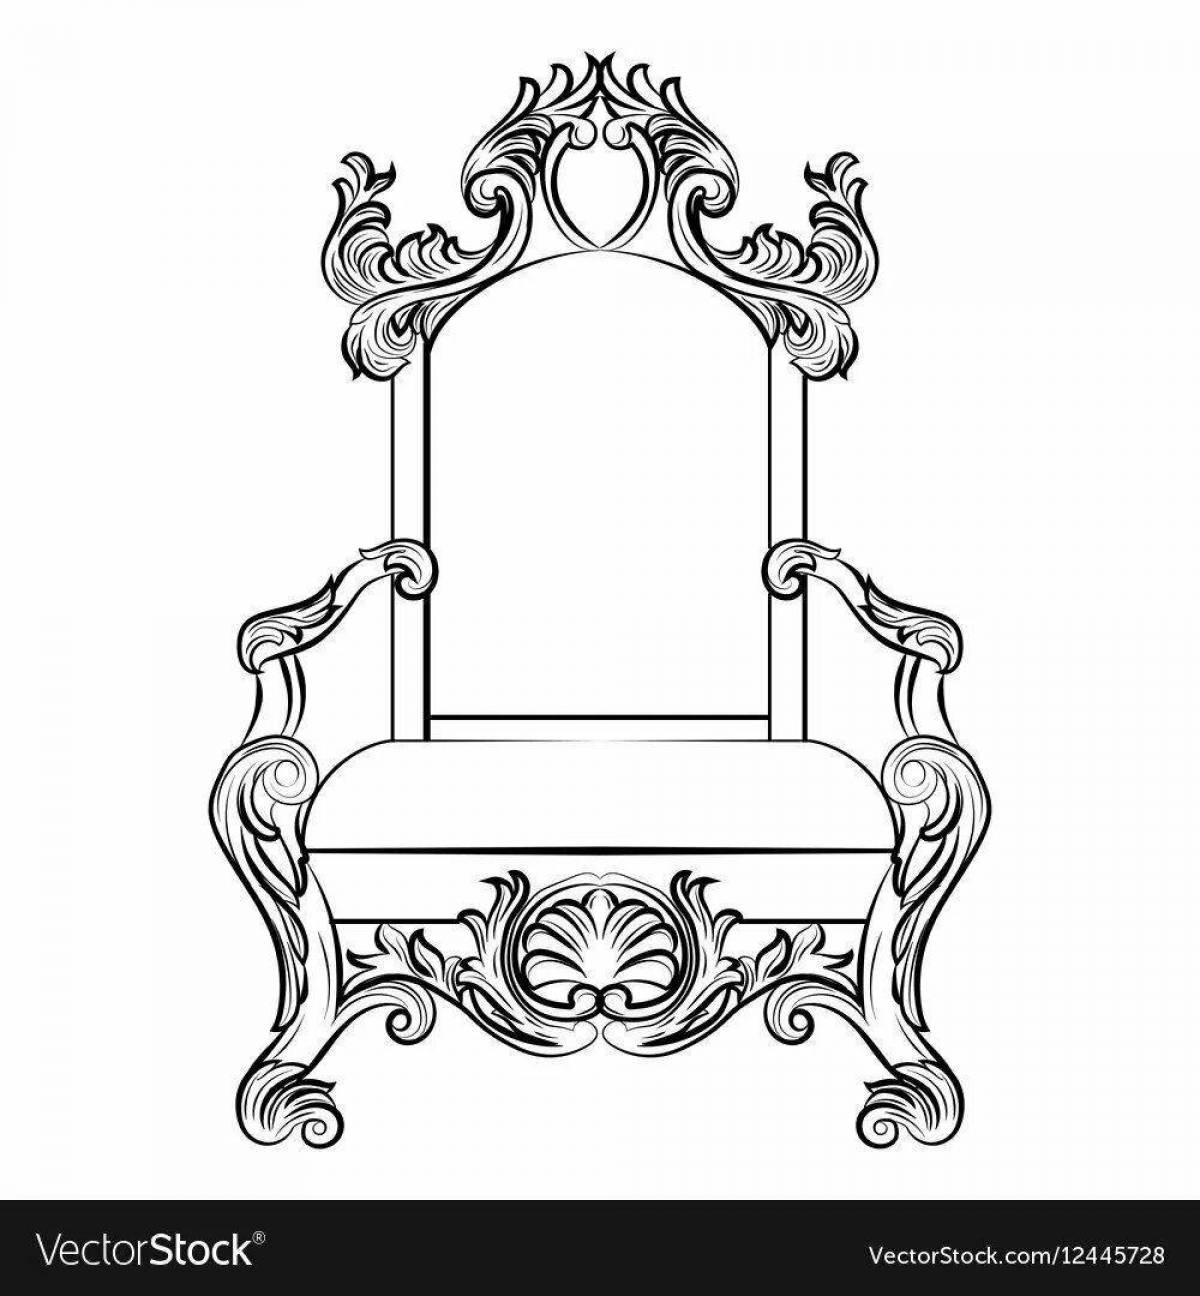 Throne #3